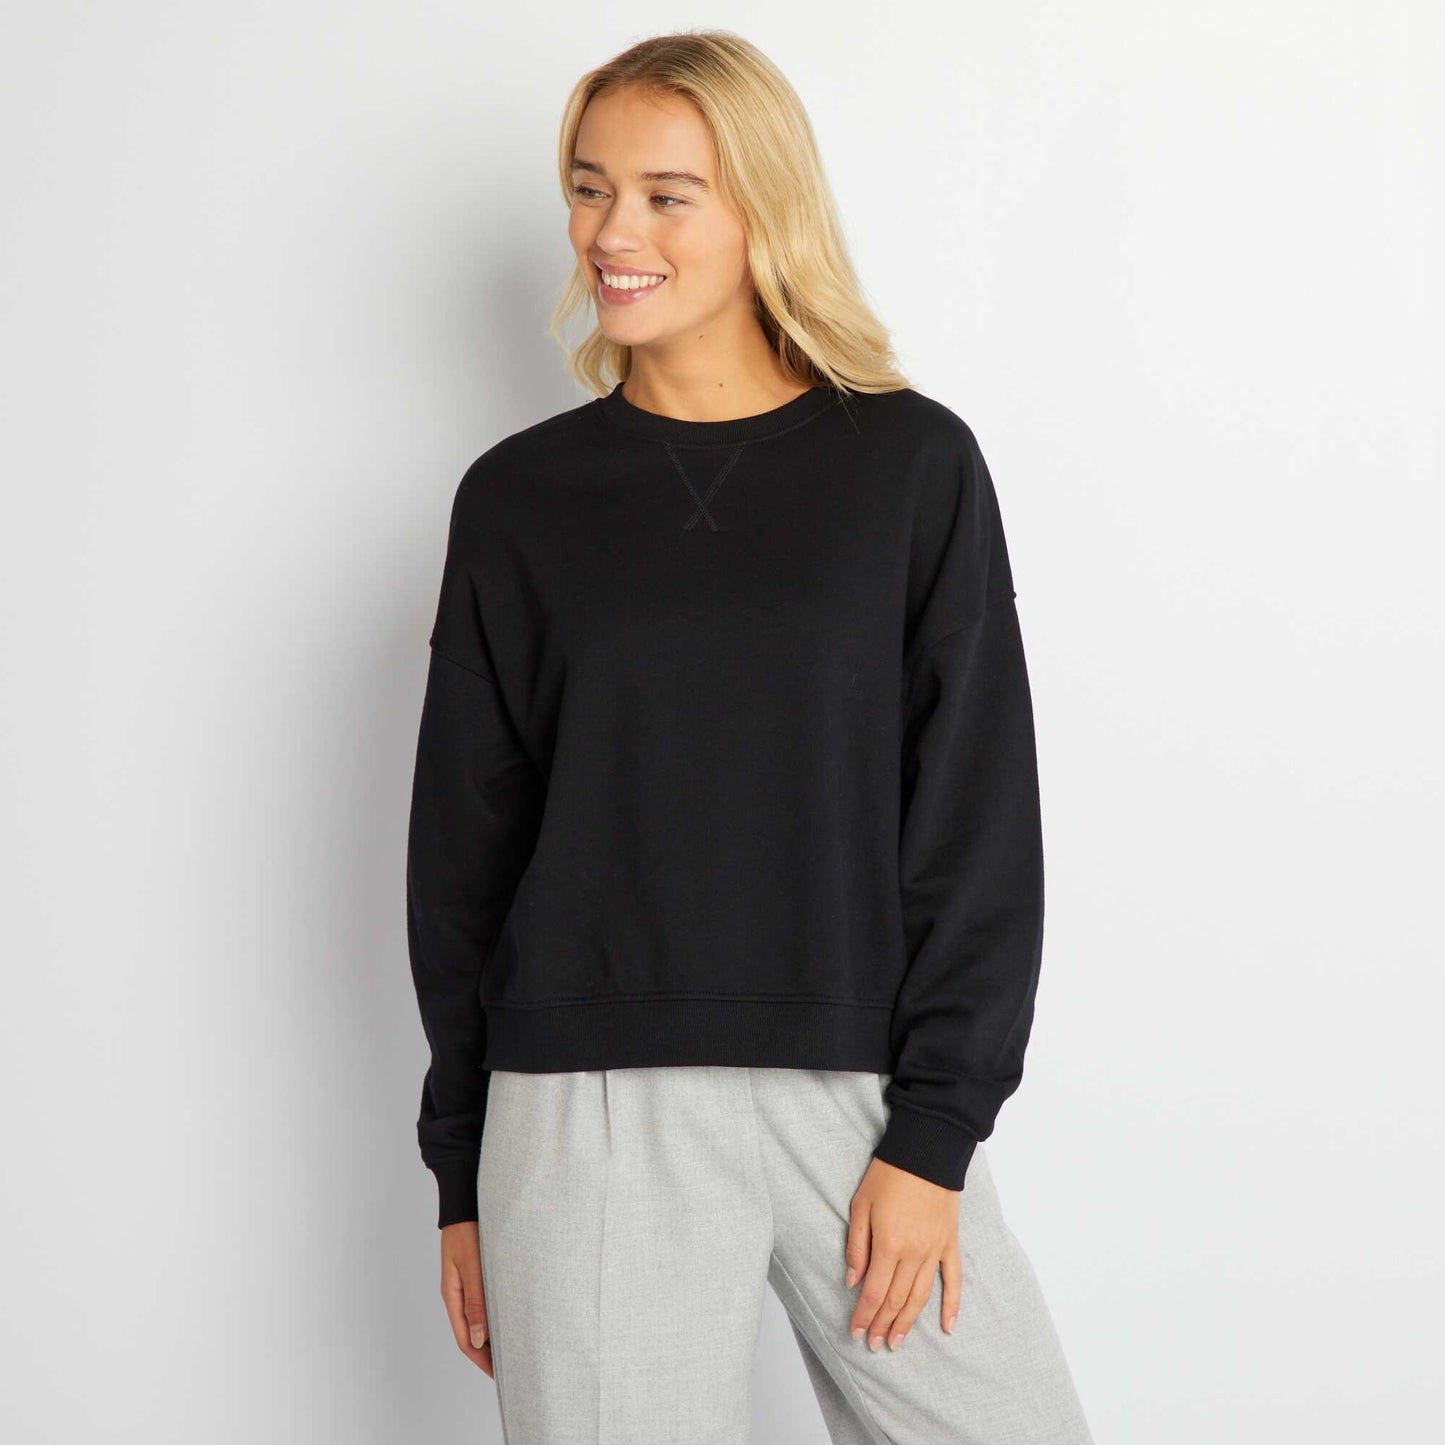 Plain sweatshirt fabric sweater black